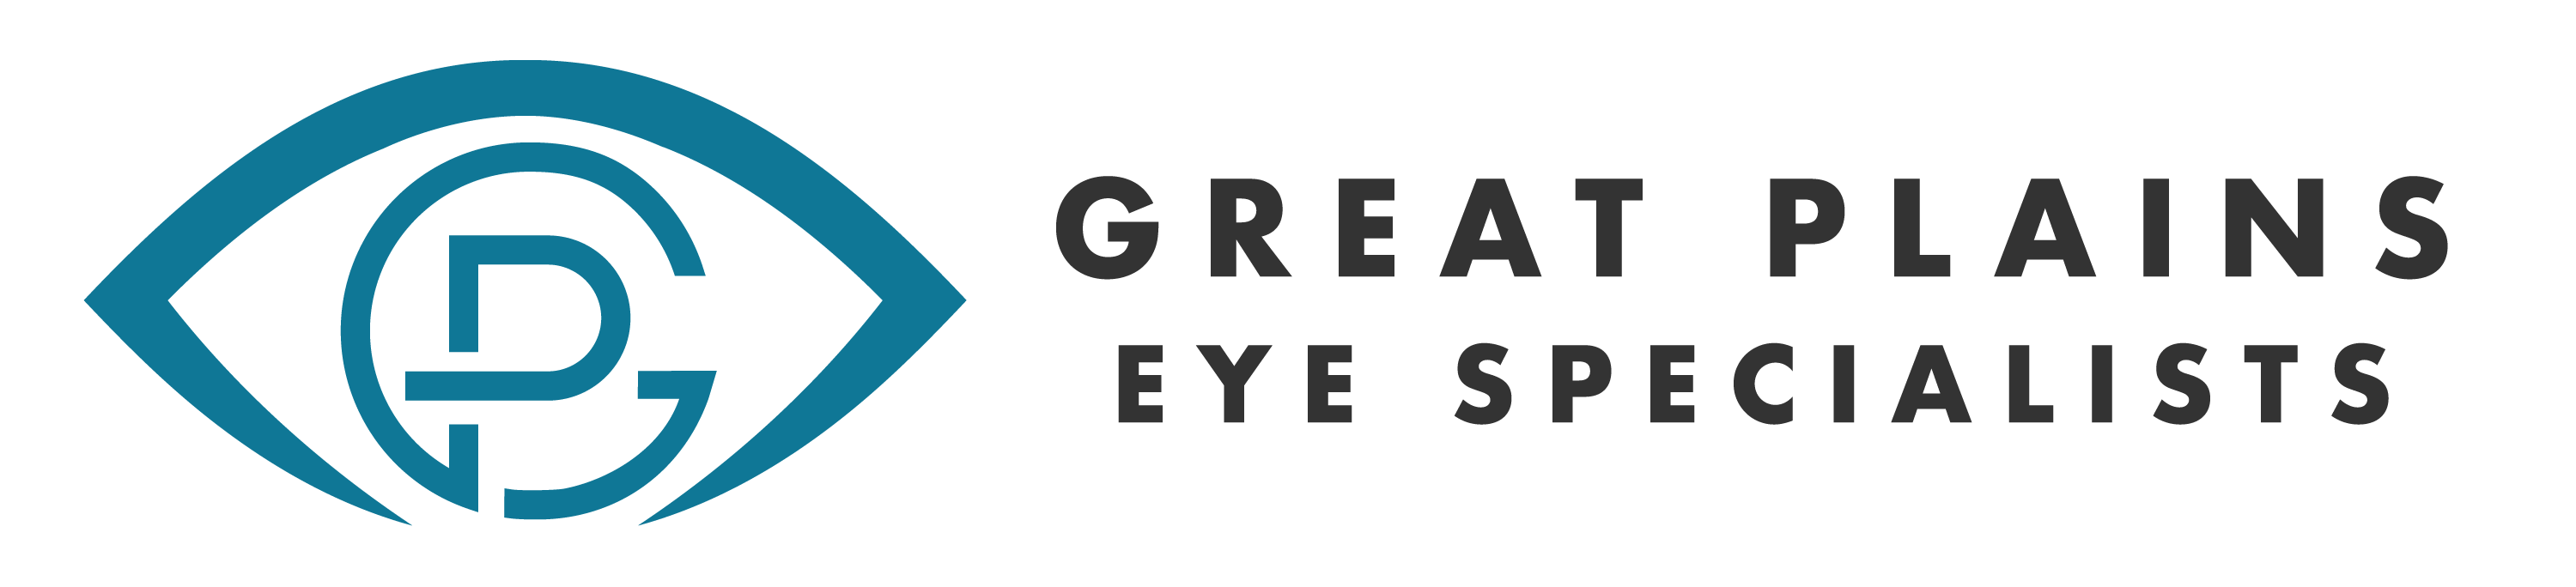 Great Plains Eye Specialists Logo